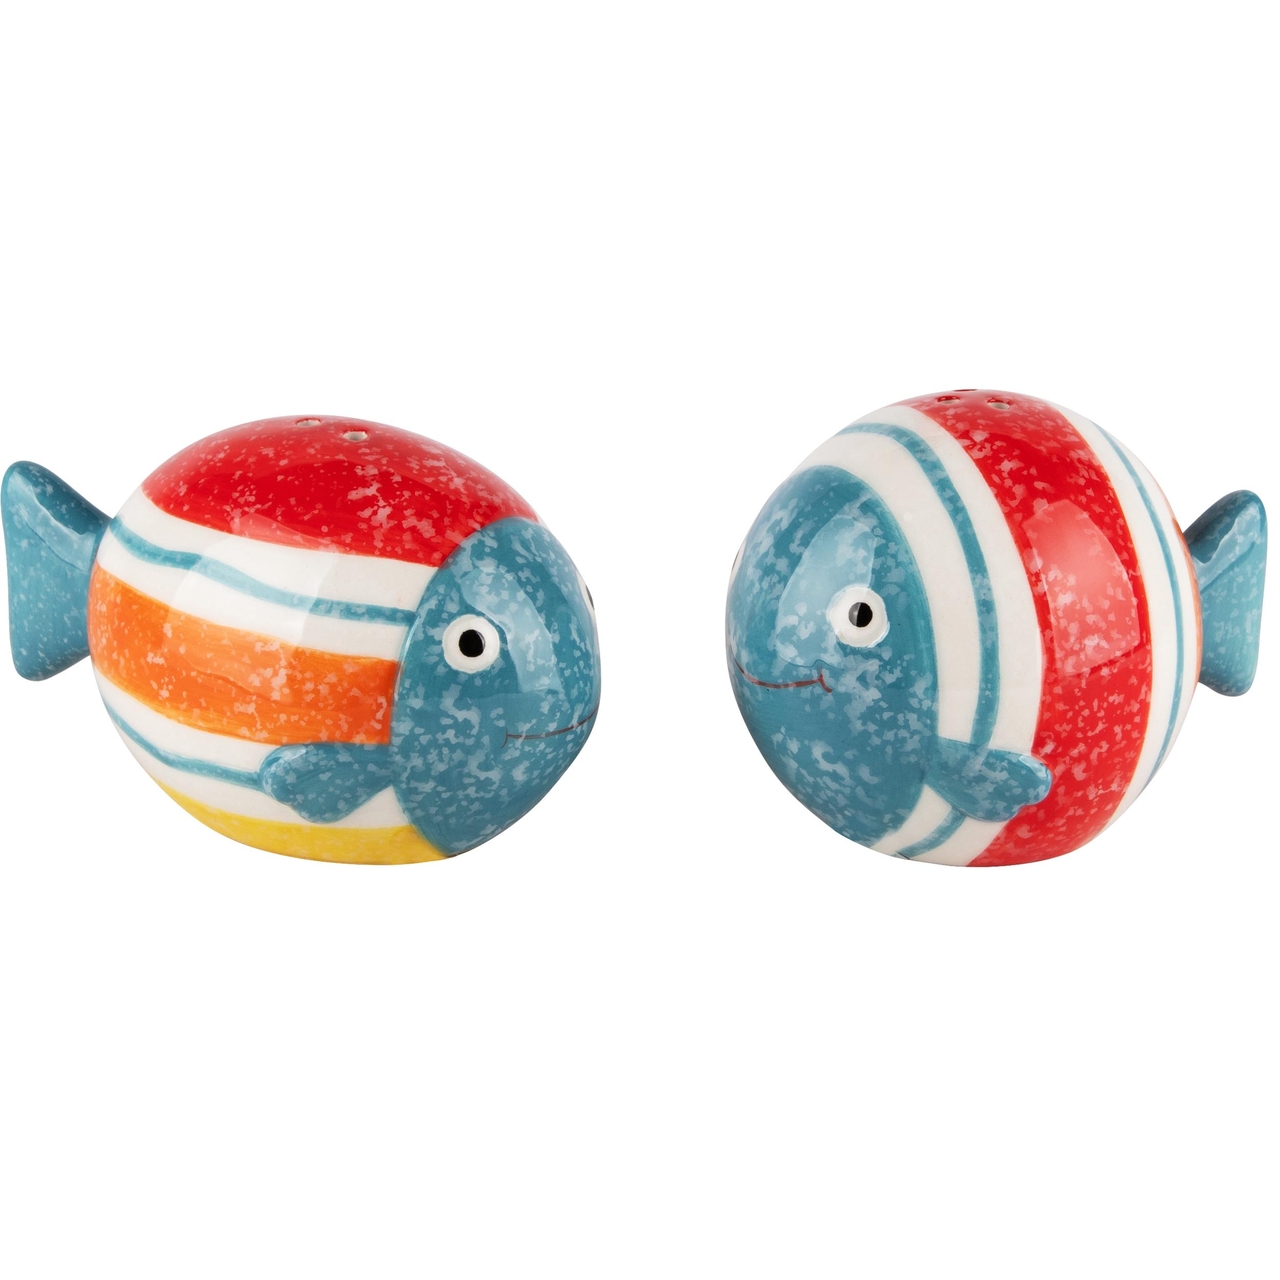 Dekoratief | Duo peper/zout vis, multicolor, keramiek, 9x7x6cm | A240052